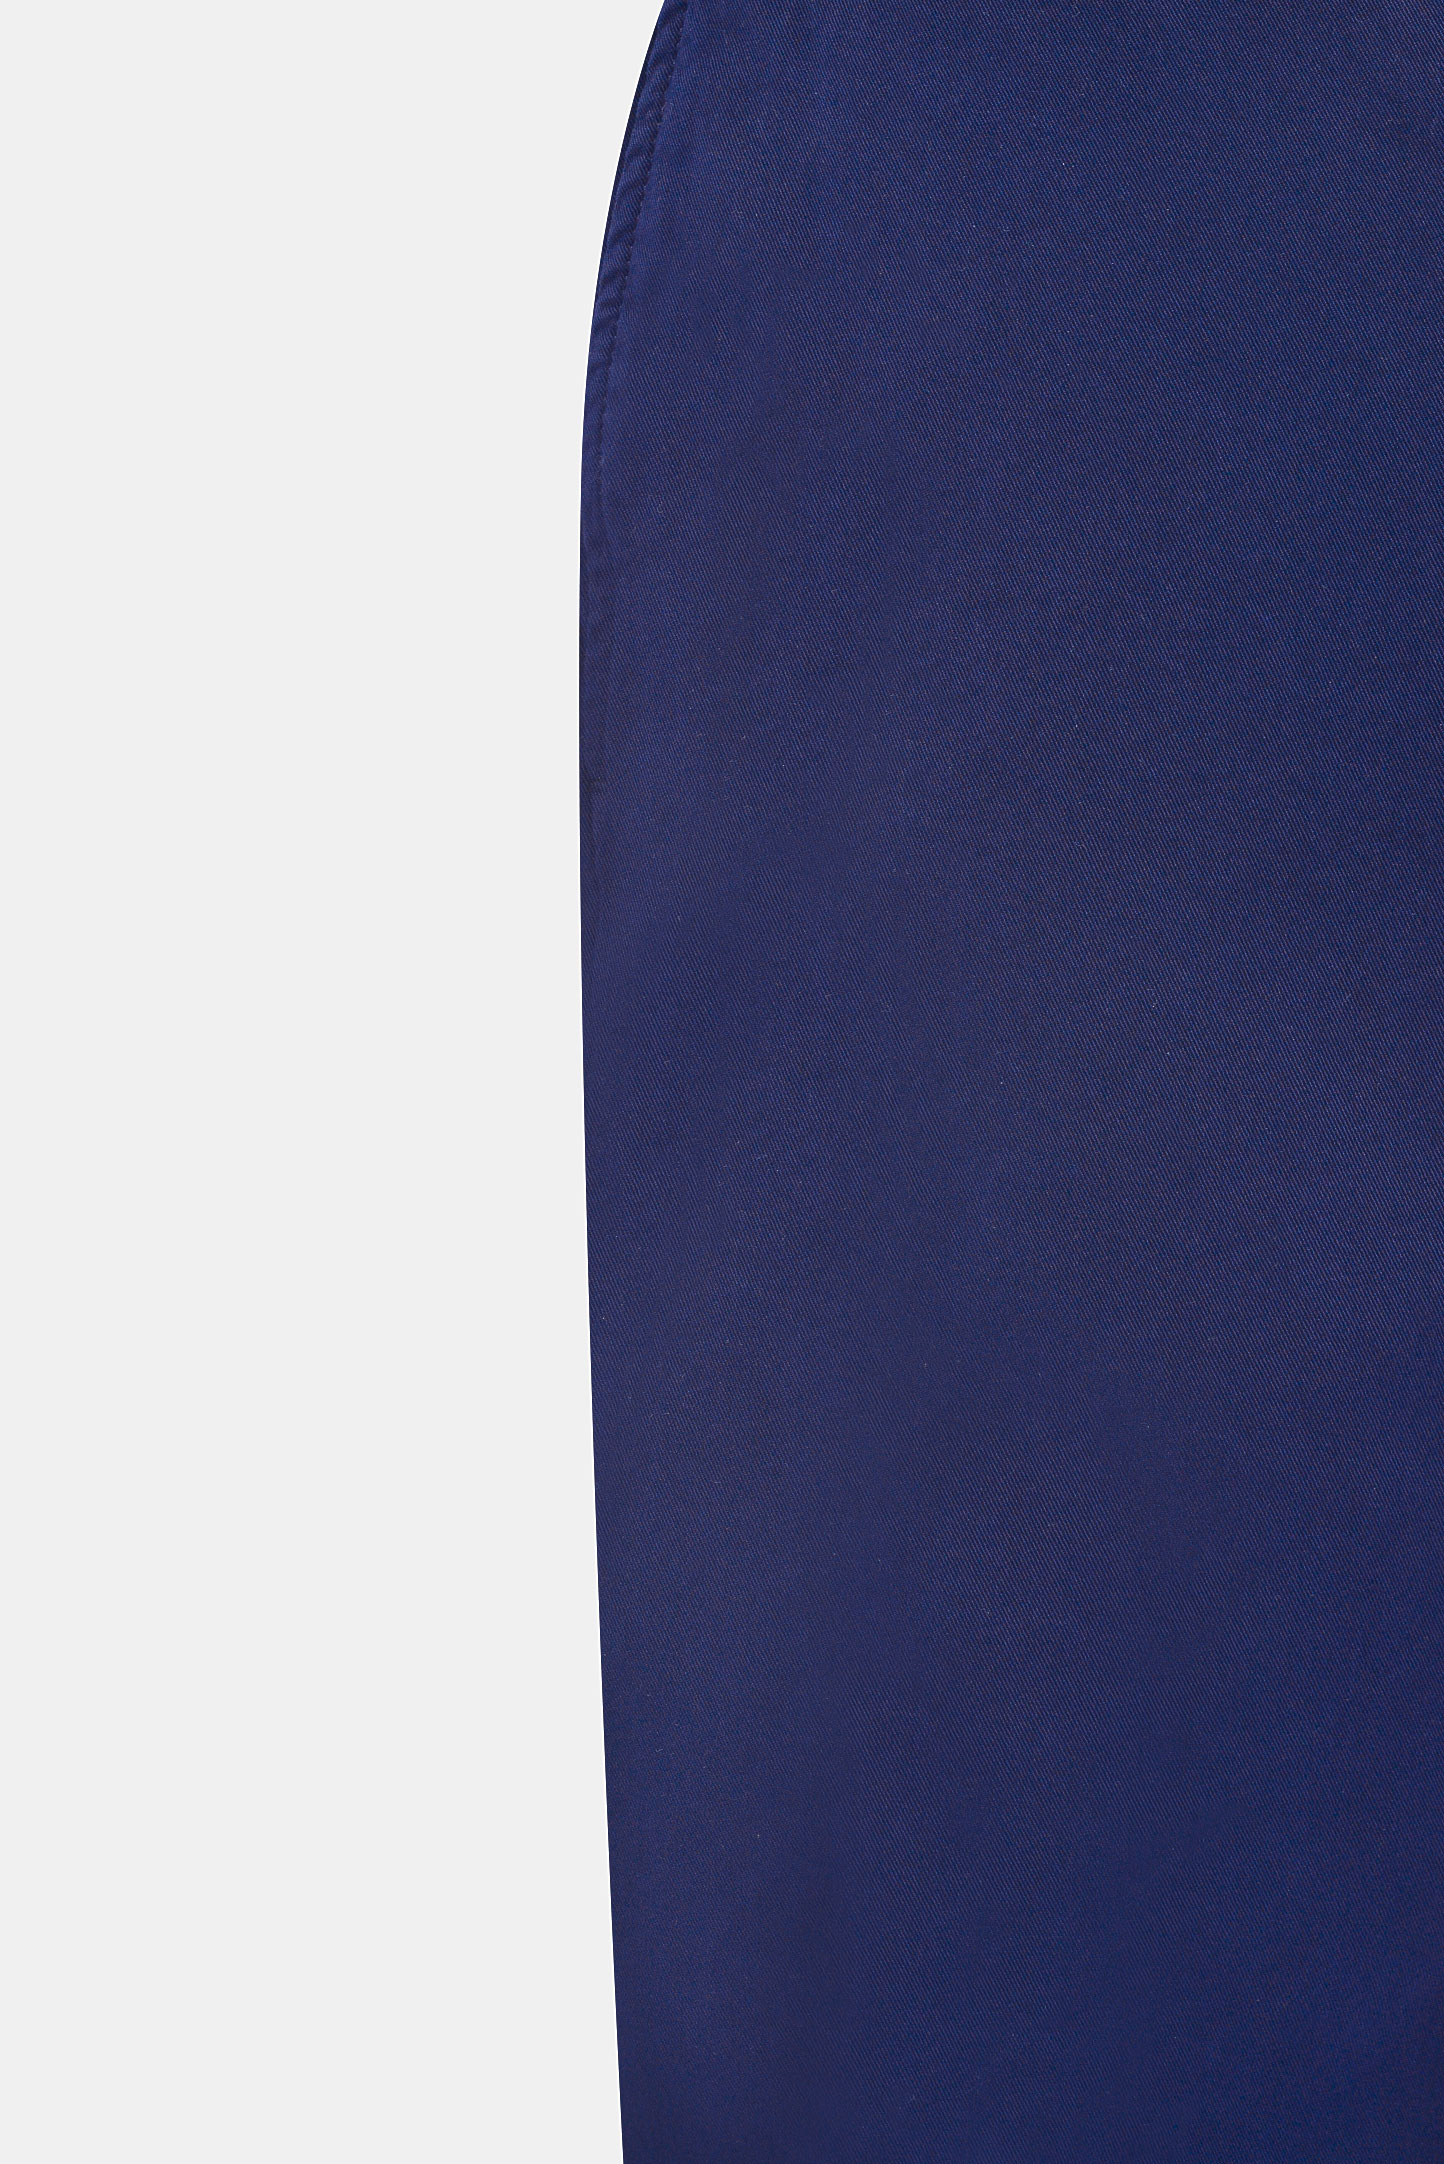 Брюки CANALI PT00452/320, цвет: Синий, Мужской